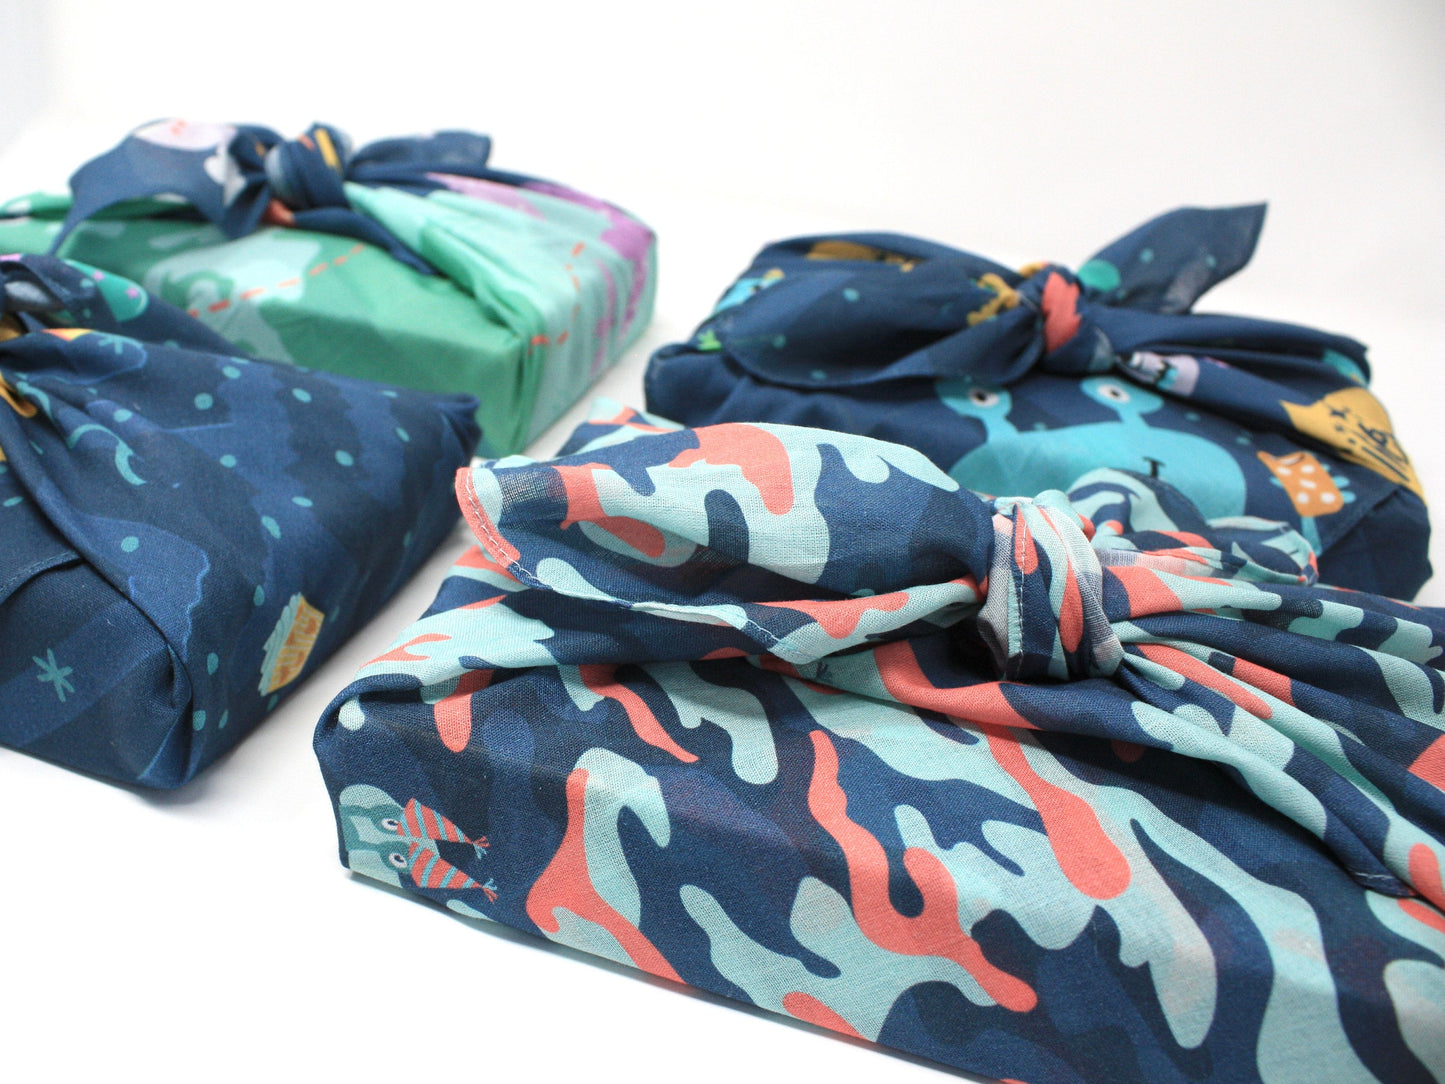 Set of 4 kids reusable fabric gift wrap - medium 53cm